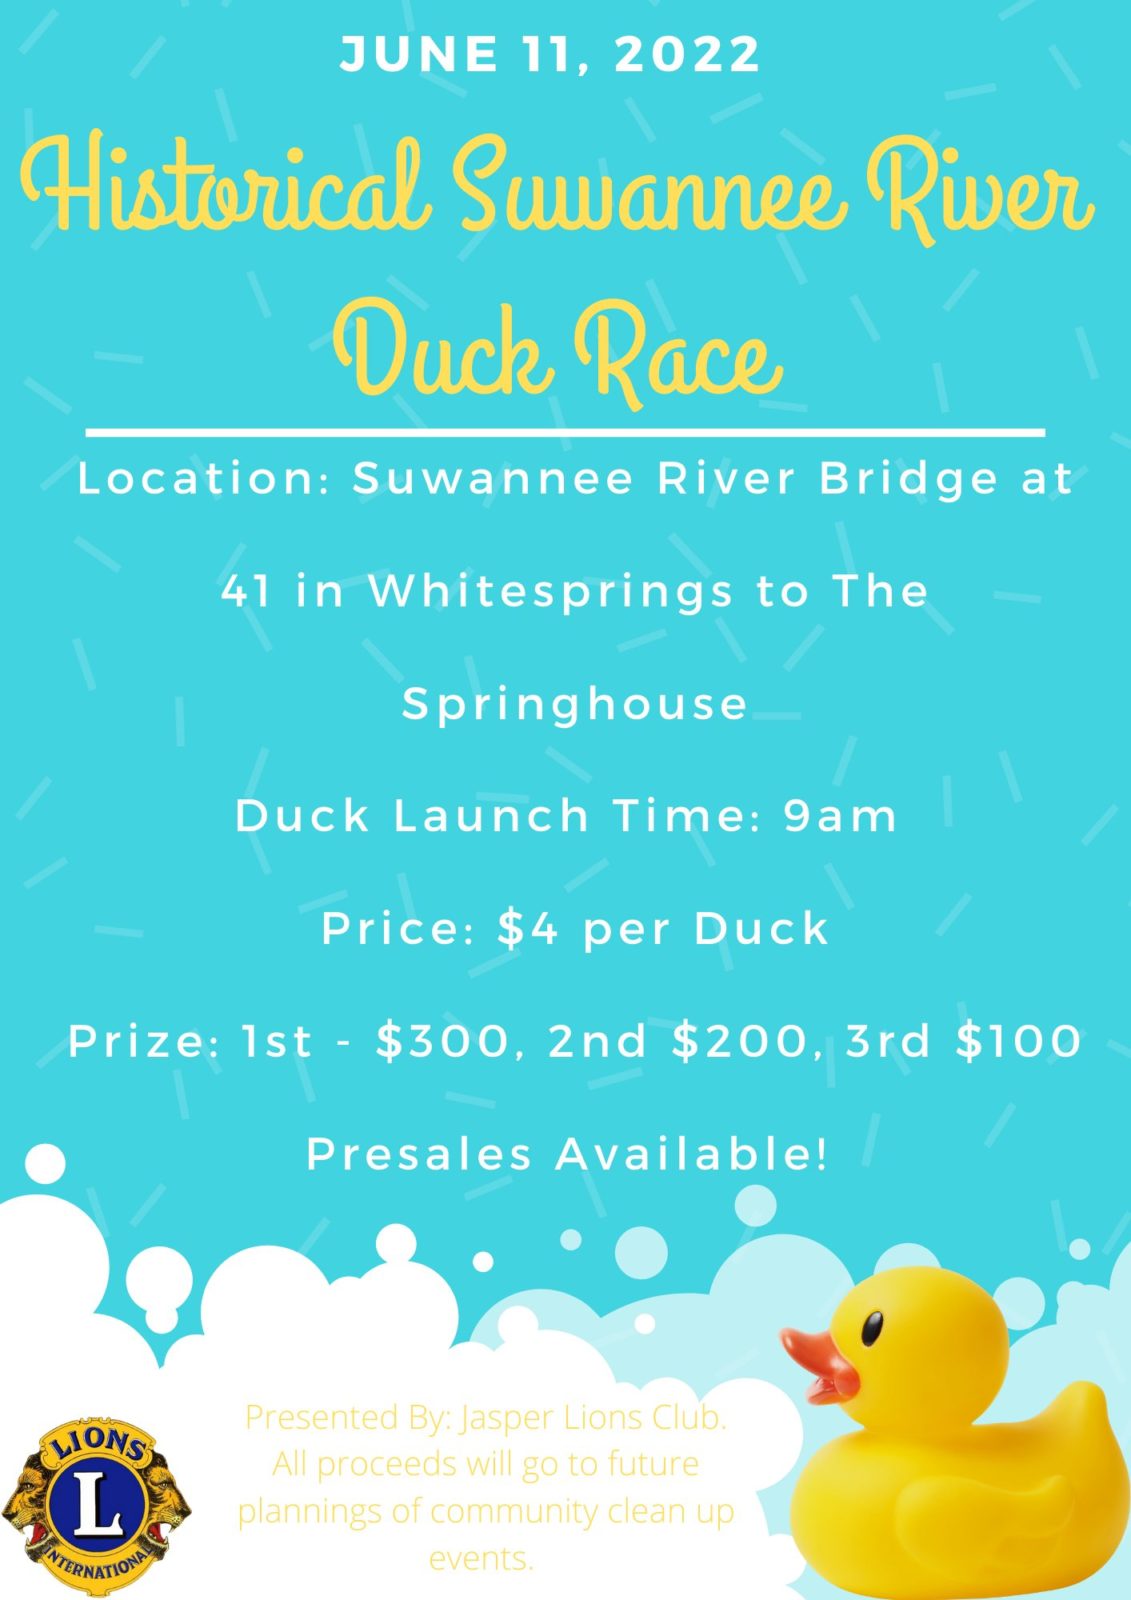 Historical Suwannee River Duck Race